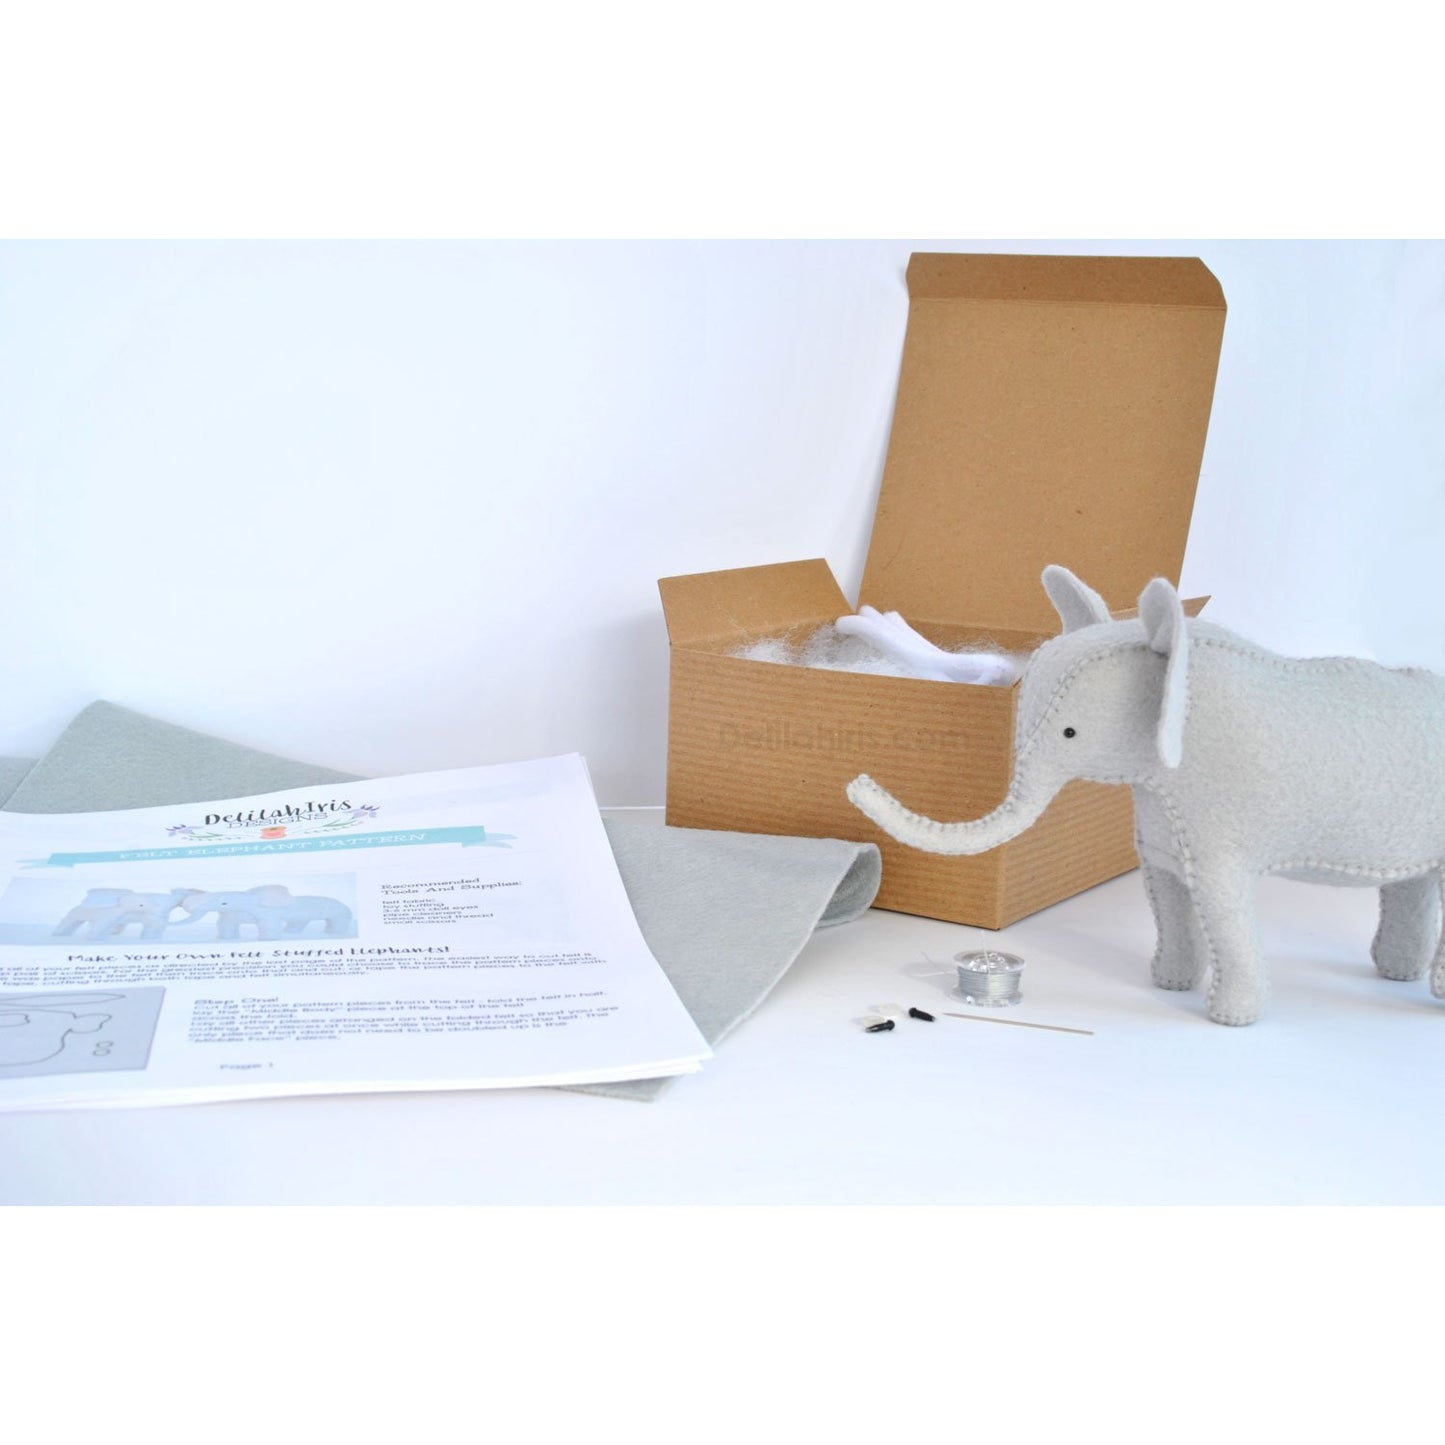 DelilahIris Designs ~ Felt Elephant Sewing Kit